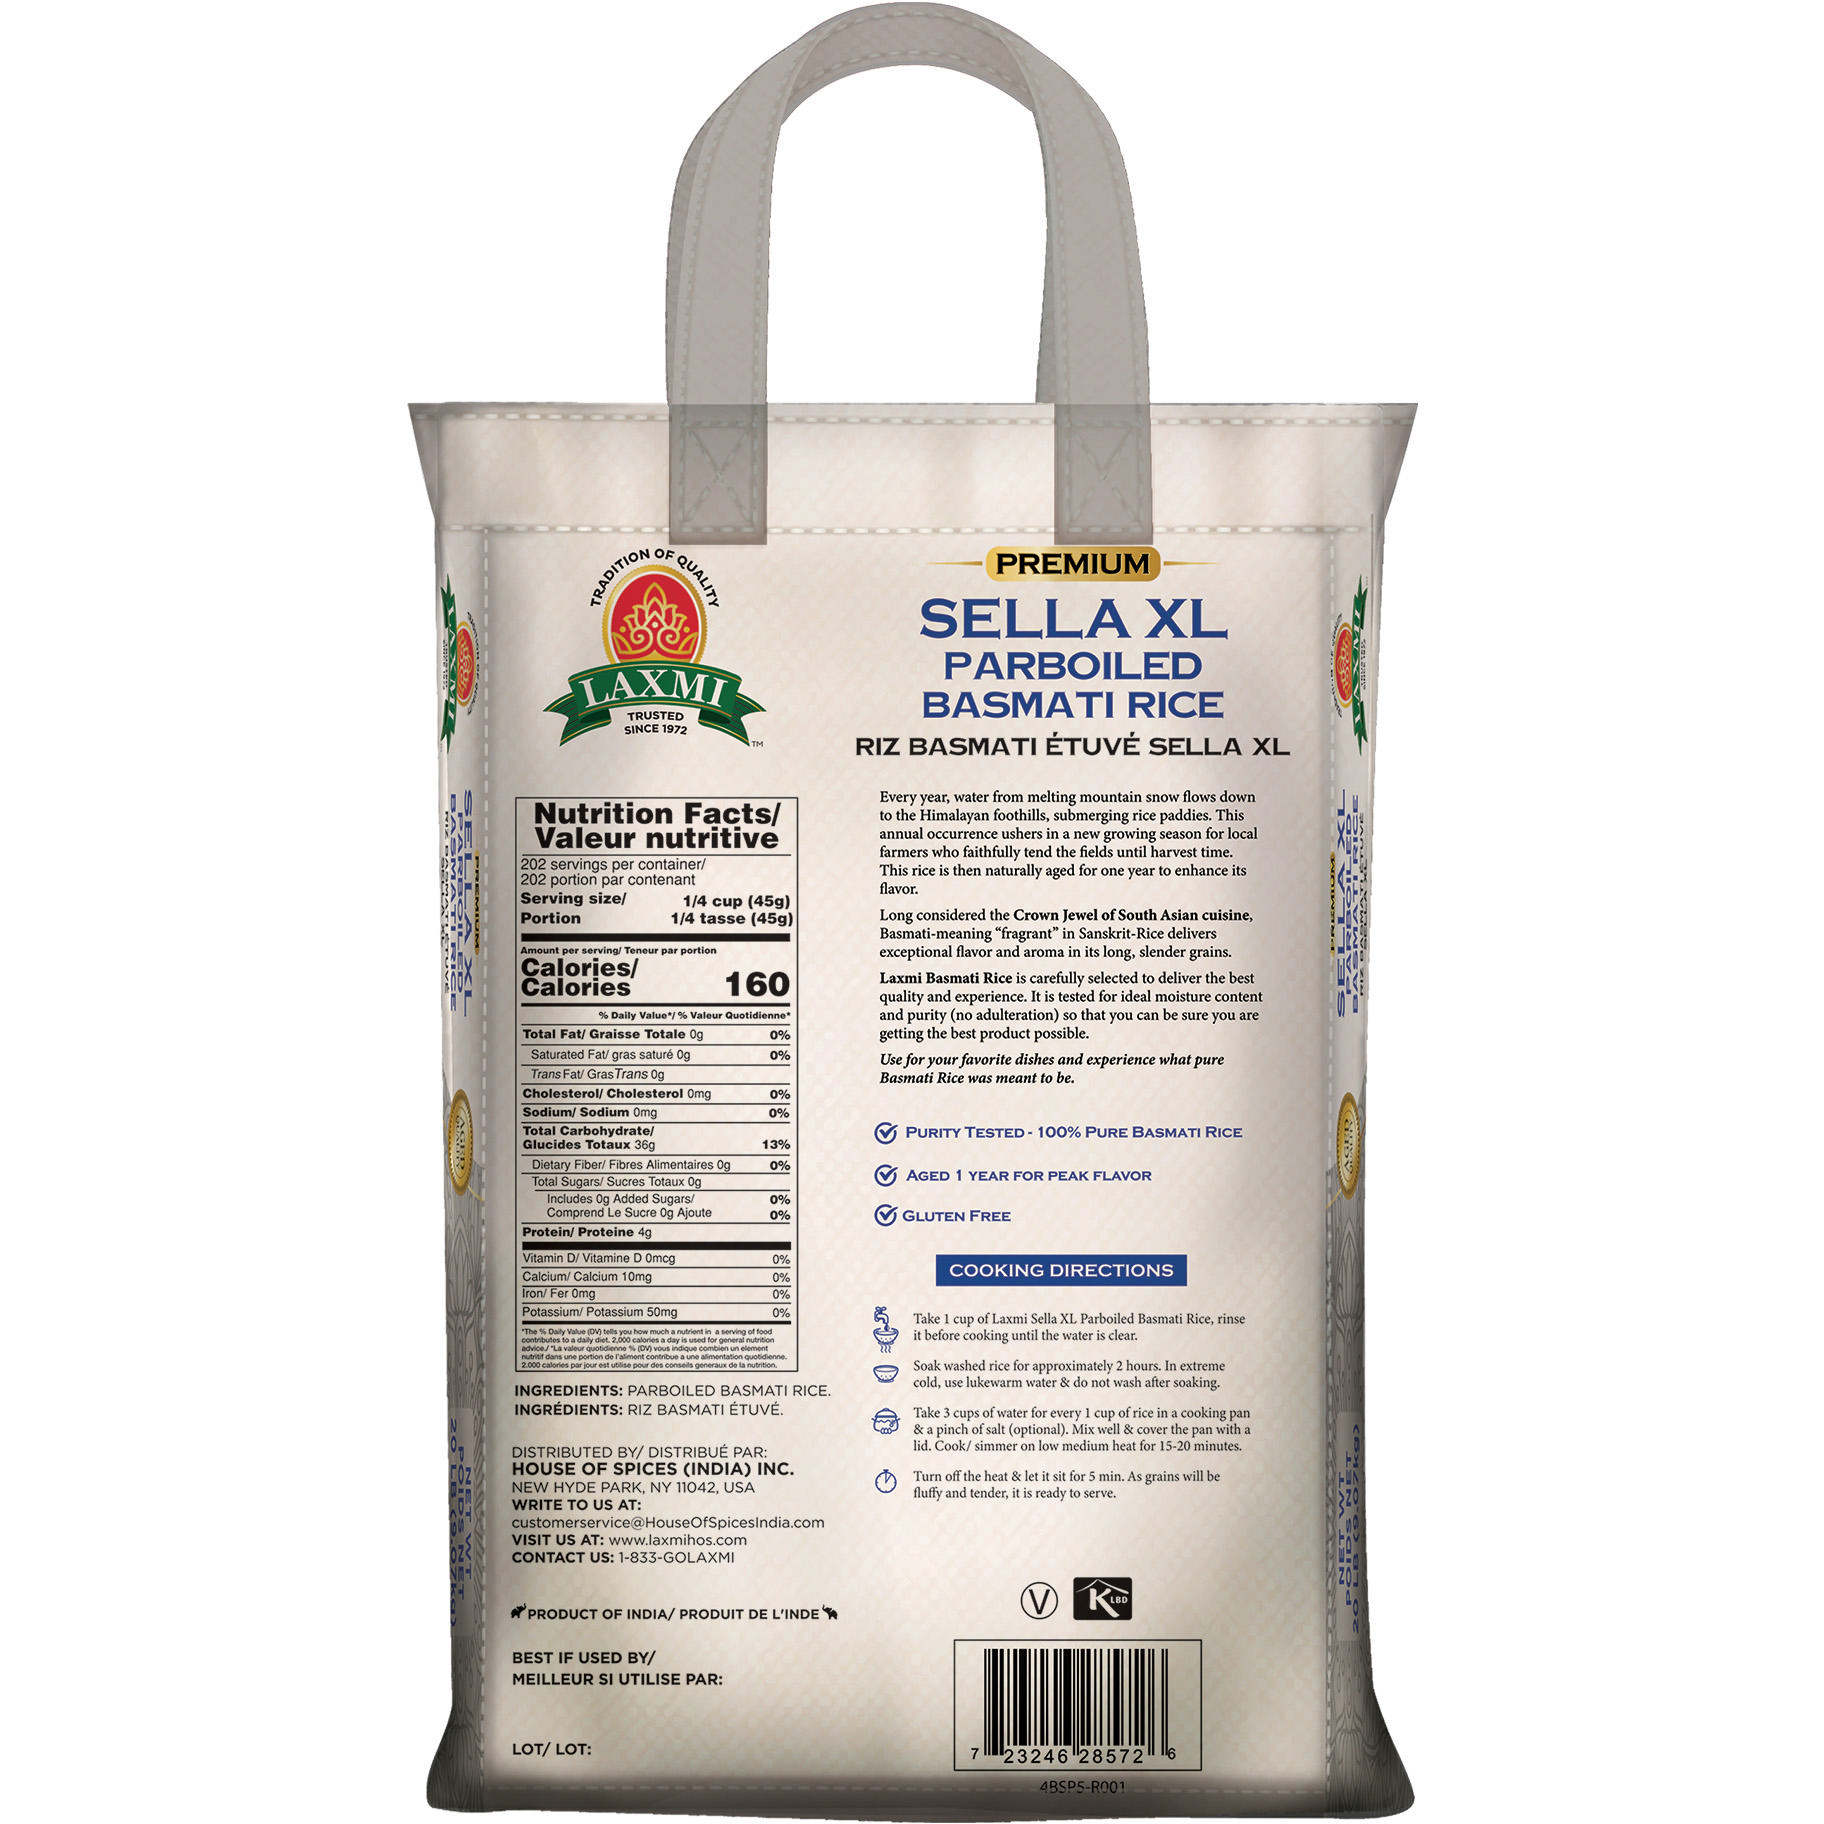 Laxmi Sella XL Parboiled Basmati Rice - 20 Lb (9.07 Kg)